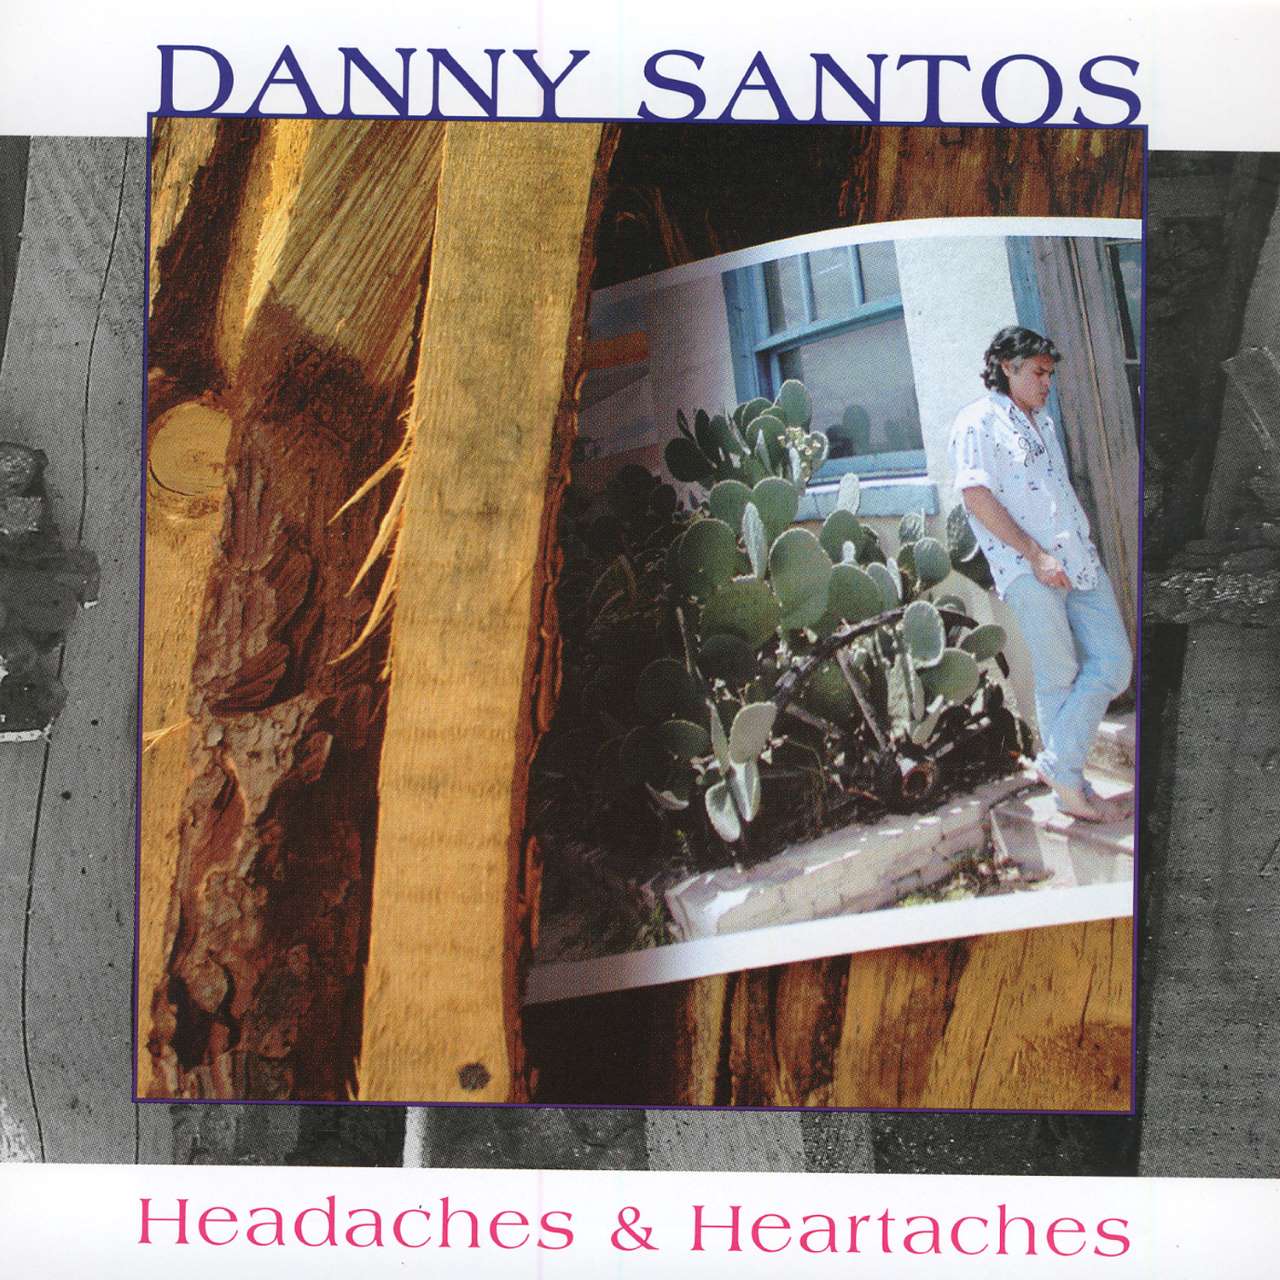 Danny Santos - Headaches & Heartaches cover balbum